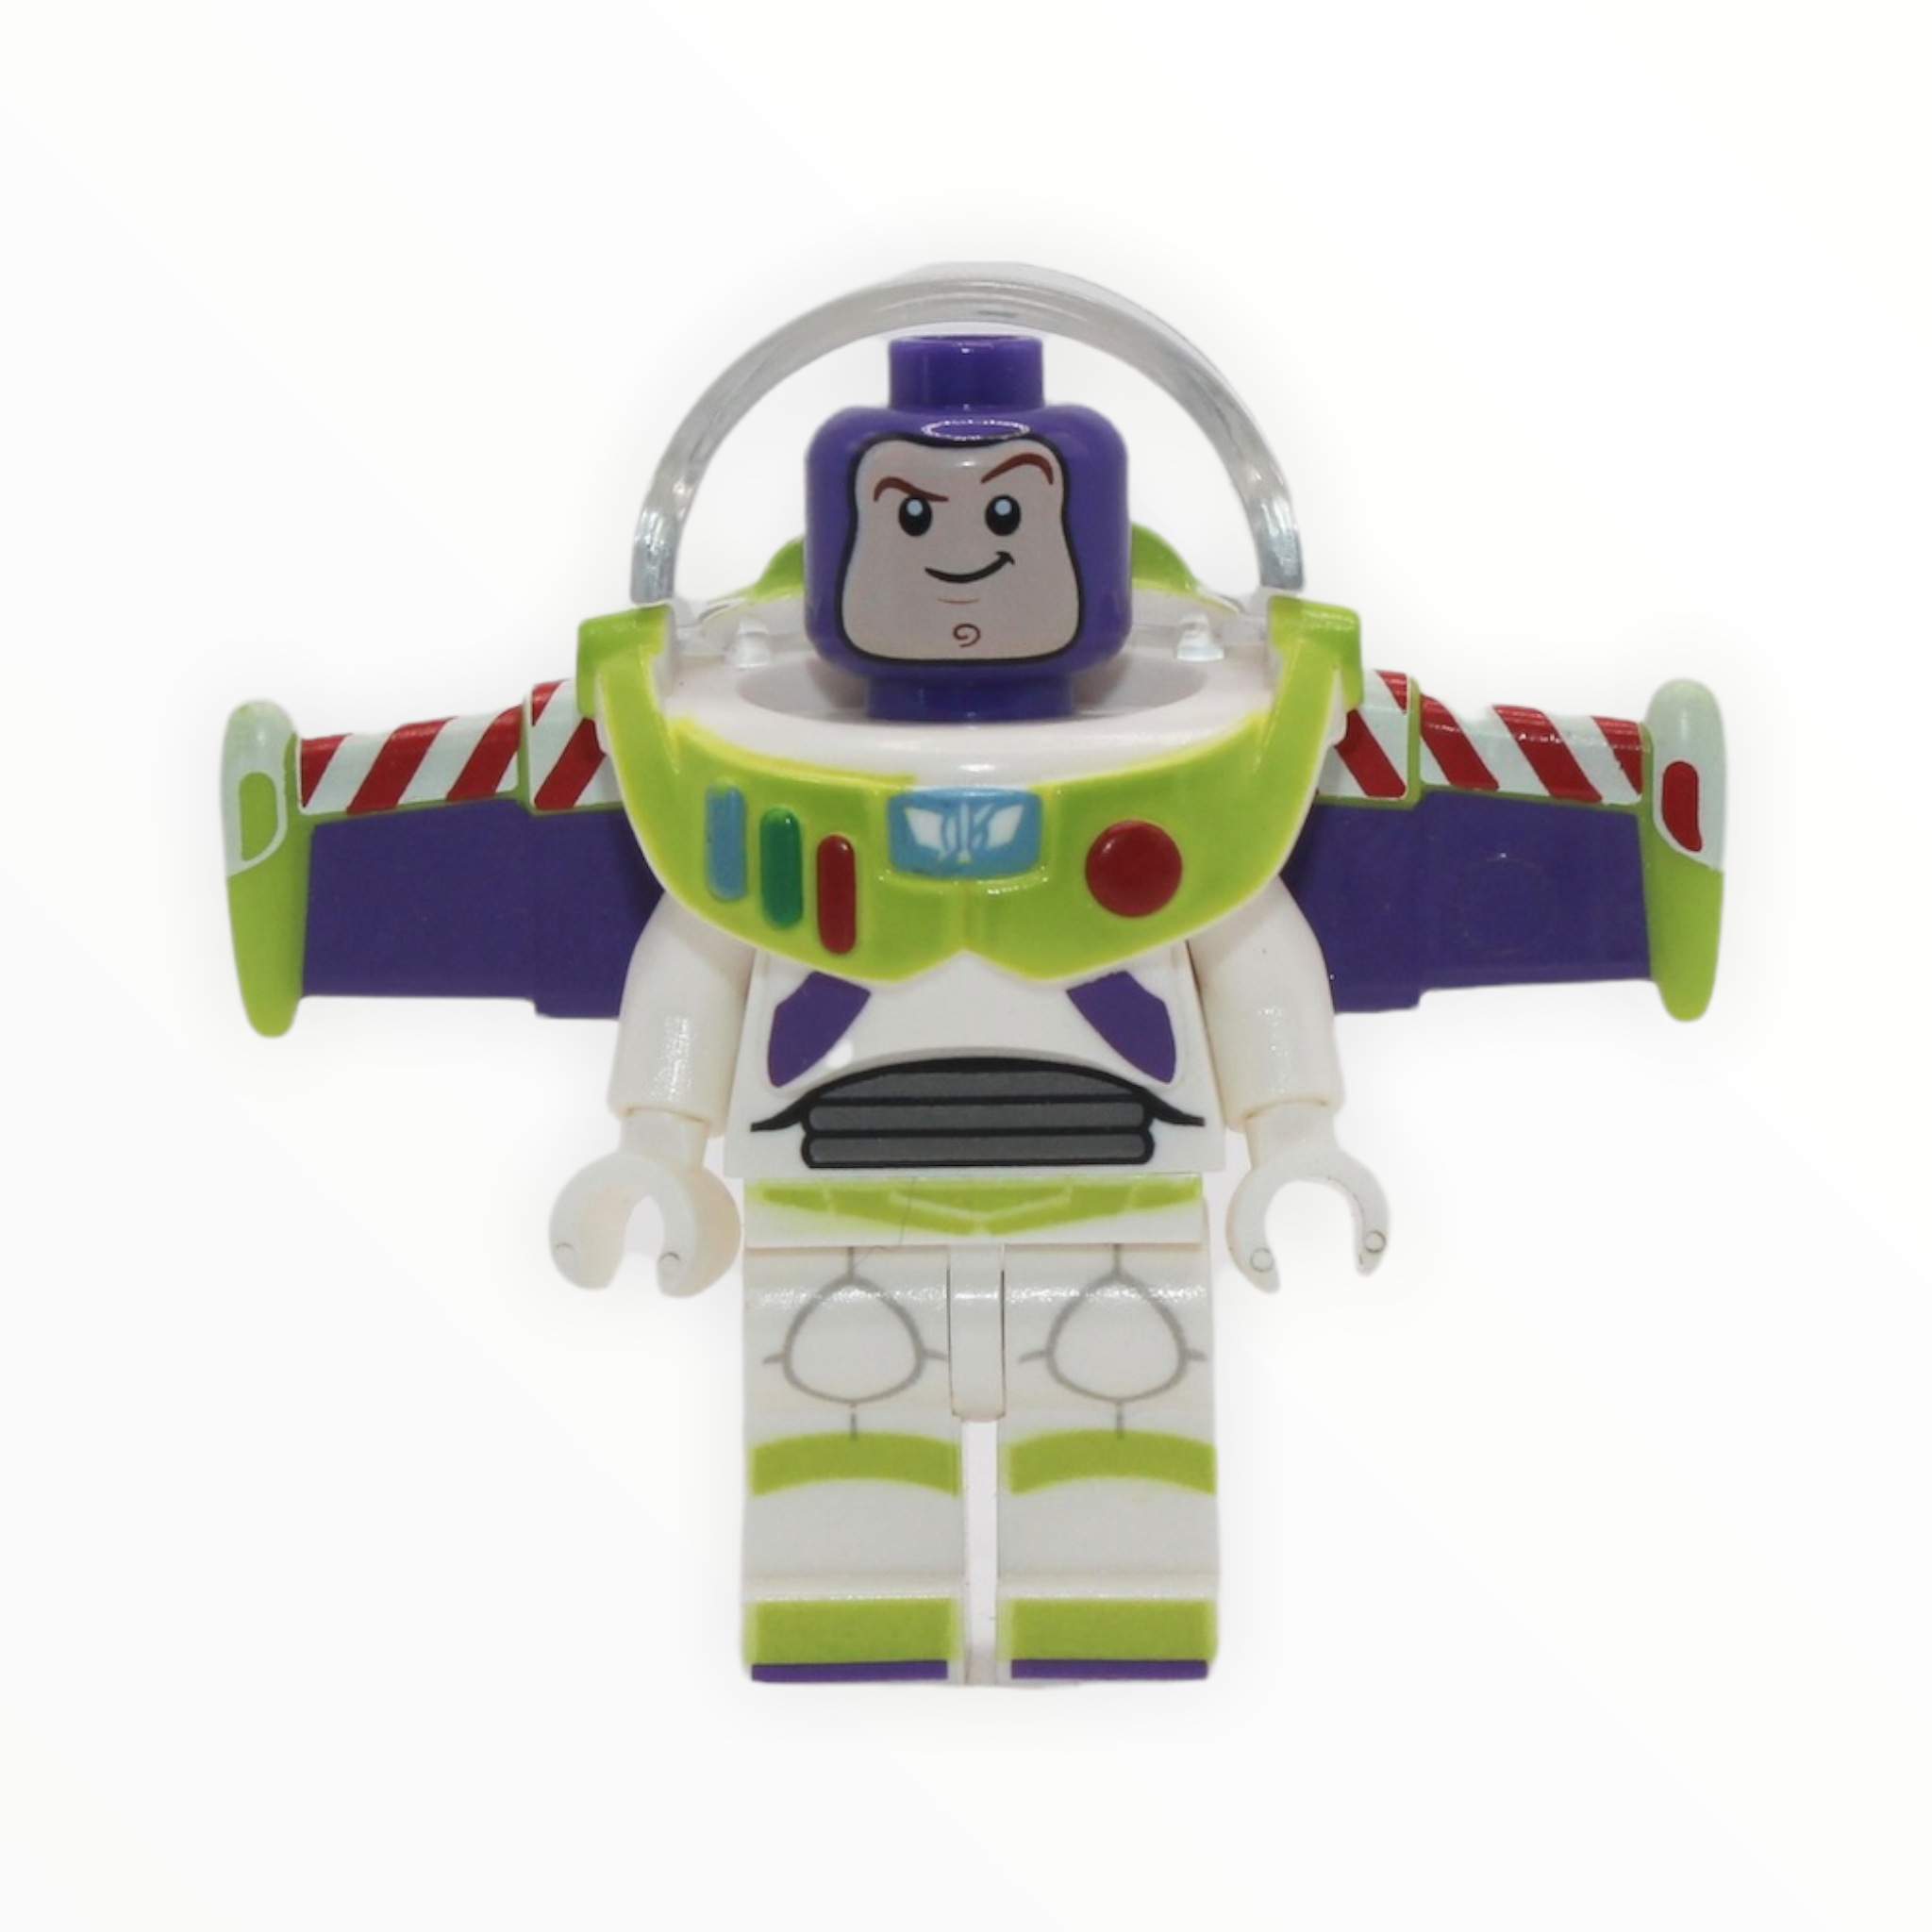 Buzz Lightyear (Toy Story 4, minifigure head, 2019)